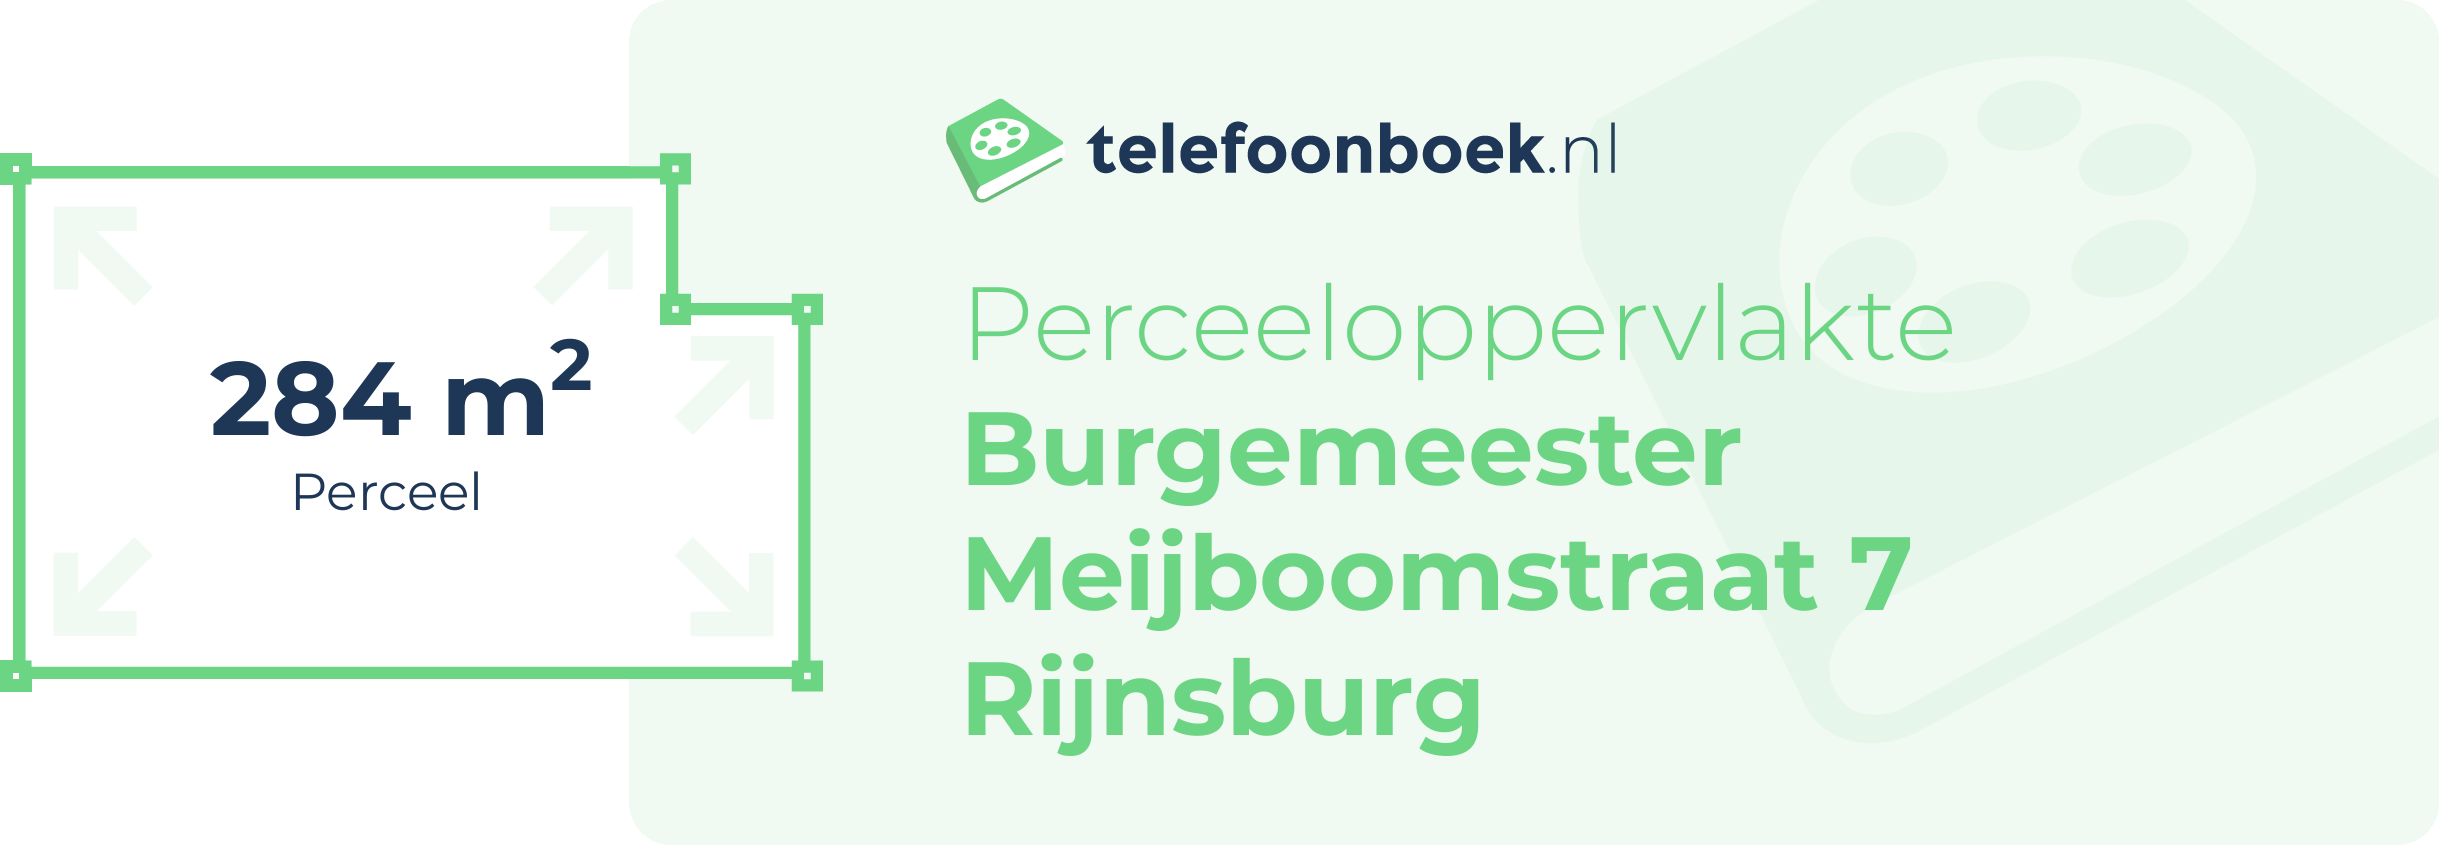 Perceeloppervlakte Burgemeester Meijboomstraat 7 Rijnsburg